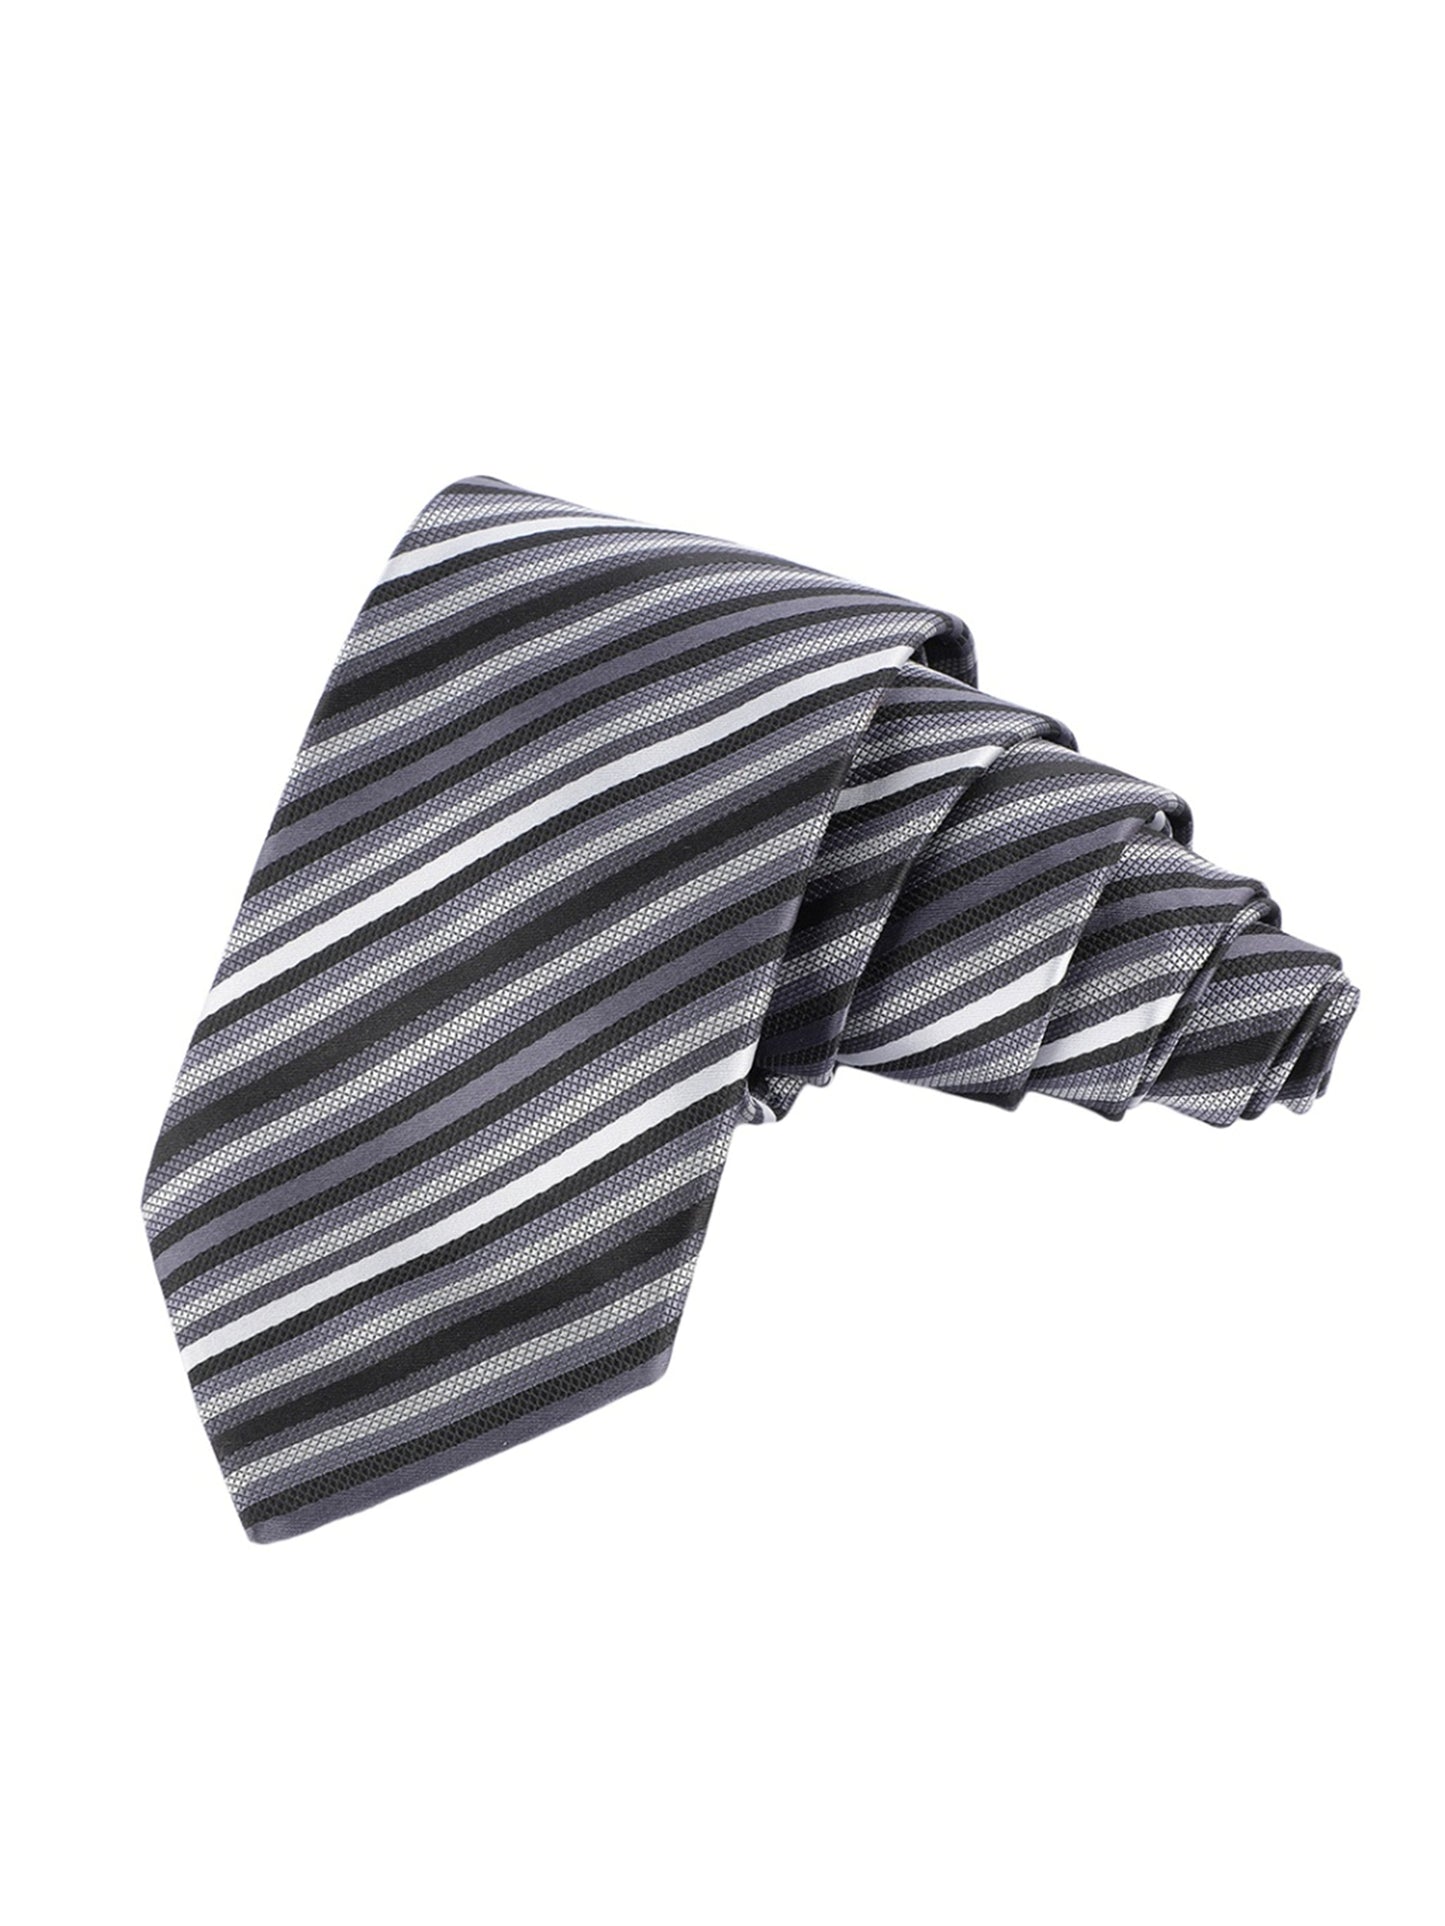 Alvaro Castagnino Microfiber Multi Colored Stripes Necktie for Men